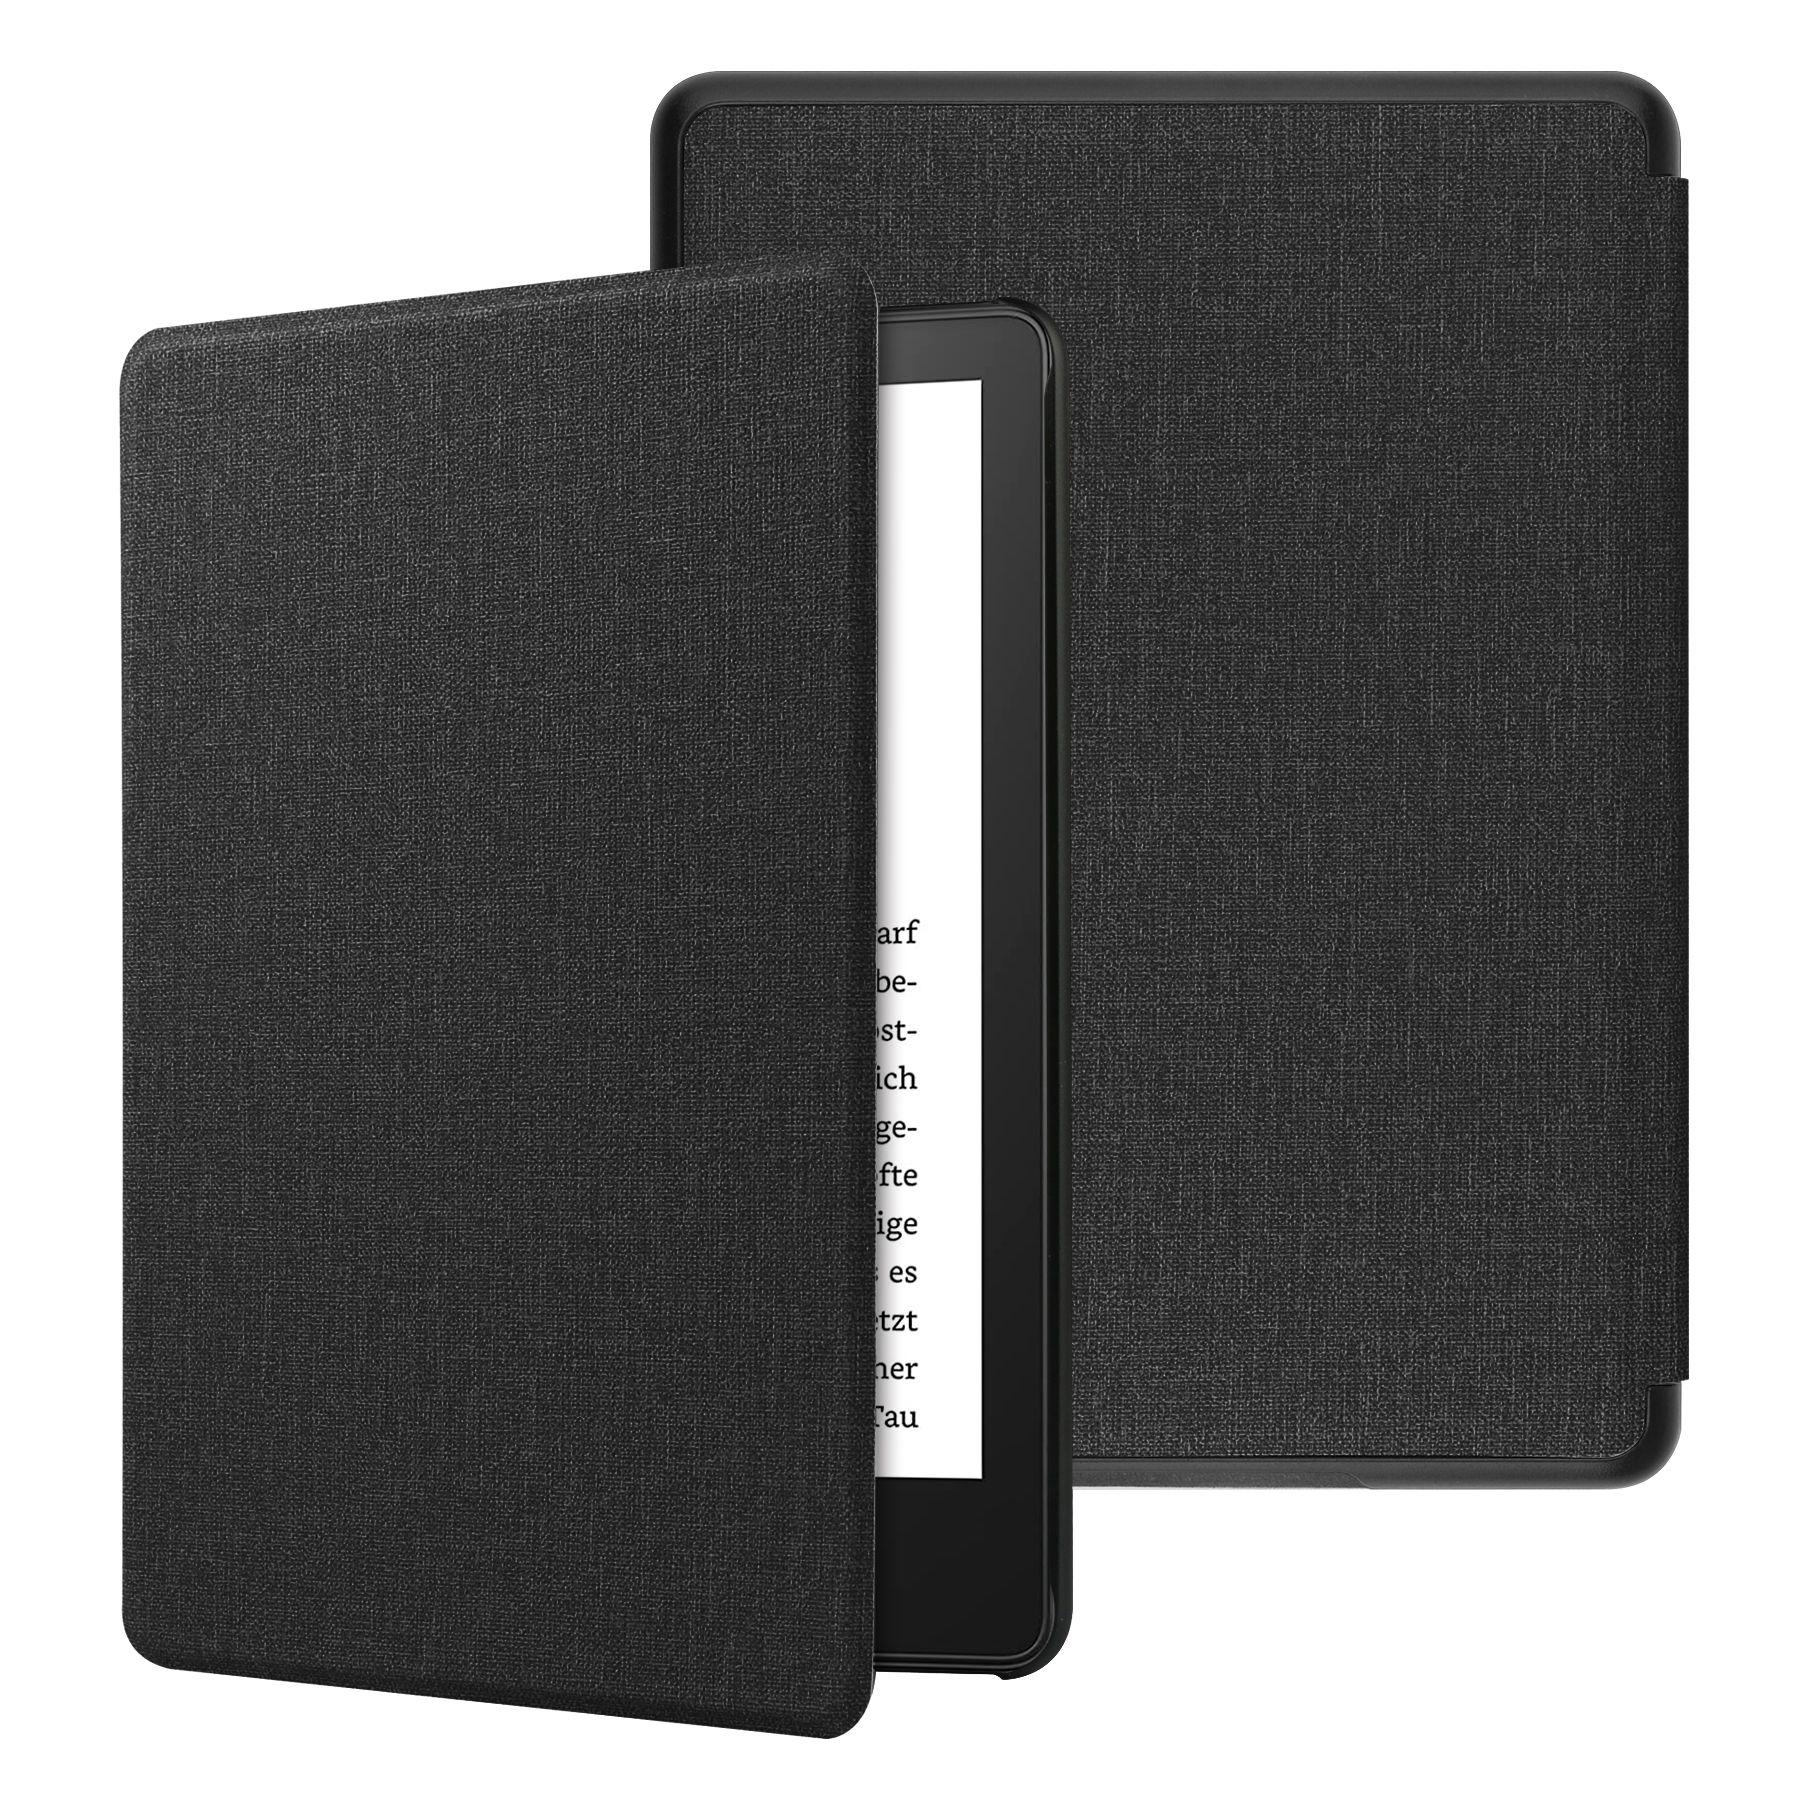 Case case Amazon Kindle Paperwhite11 2021 KPW5 6.8 inch - type 2